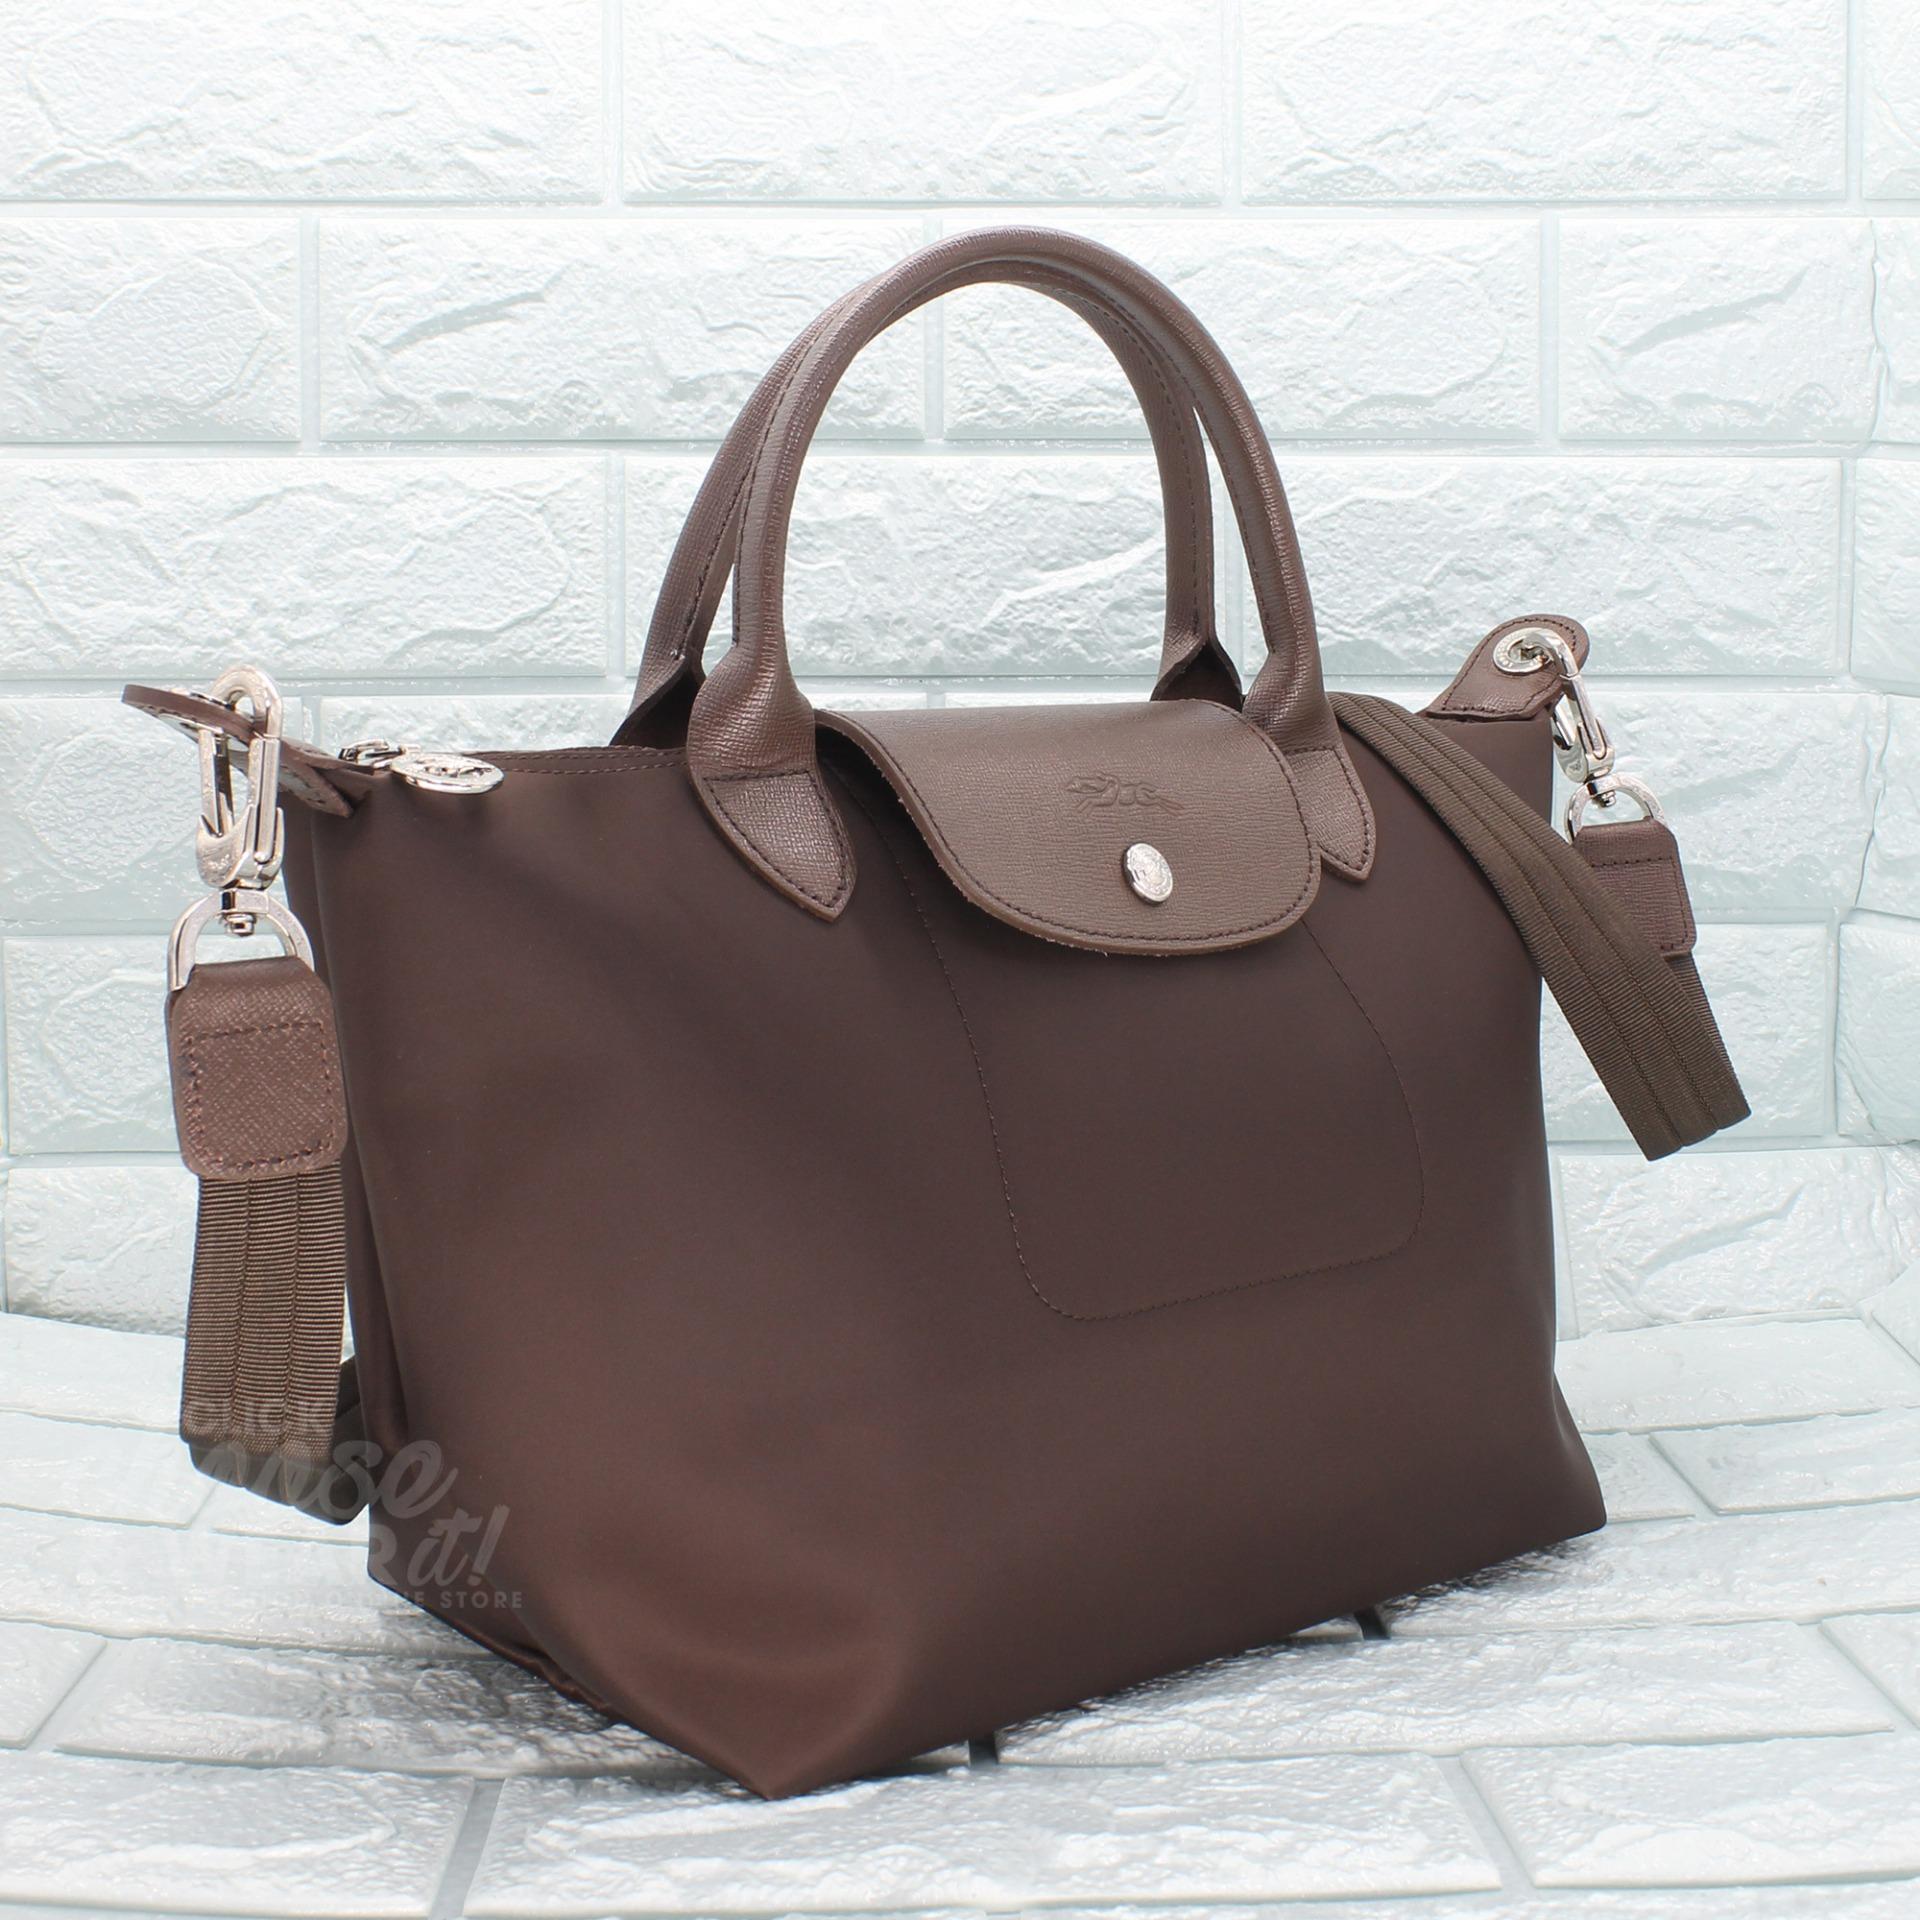 Longchamp Bag Sale Philippines